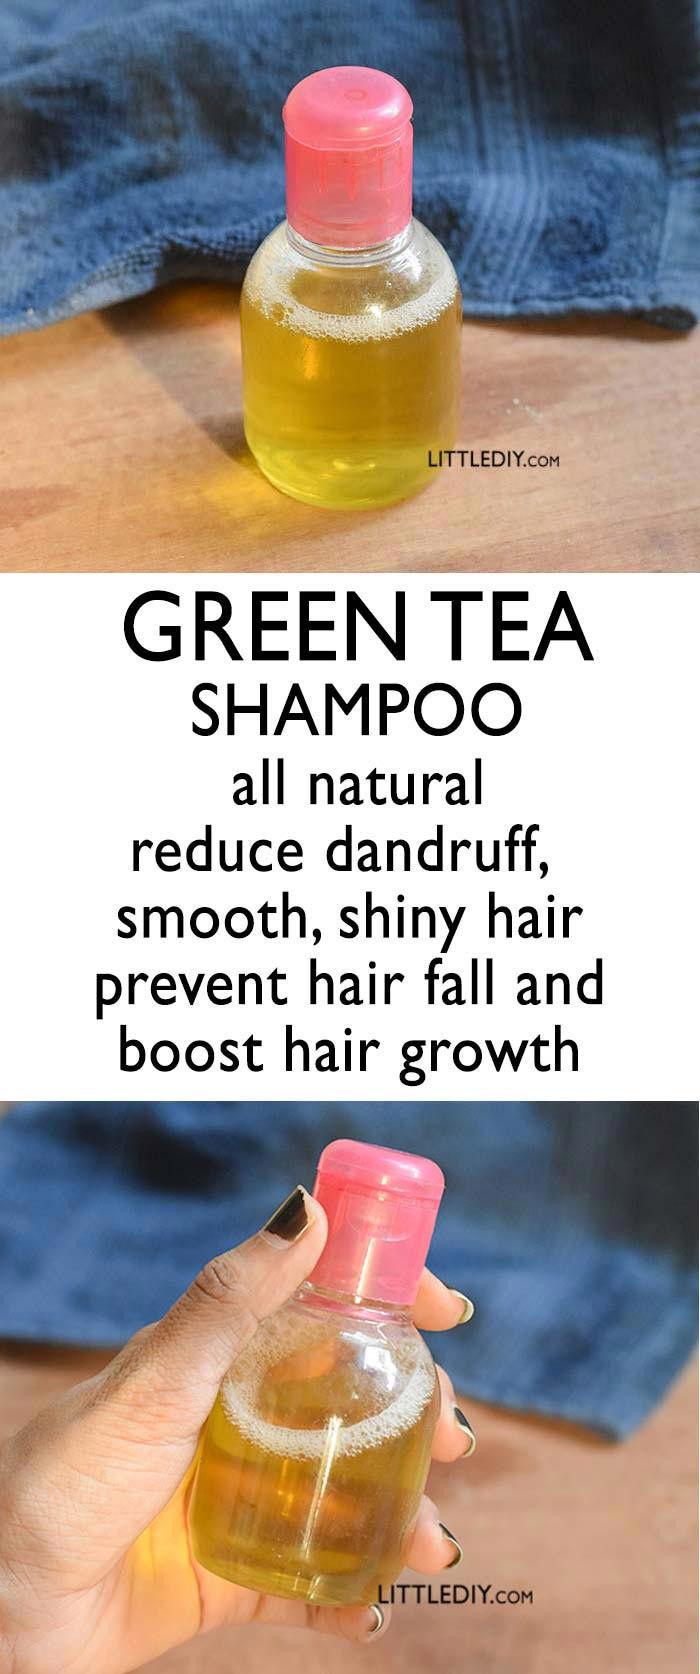 DIY Shampoo For Hair Growth
 DIY Green Tea Hair Growth Shampoo